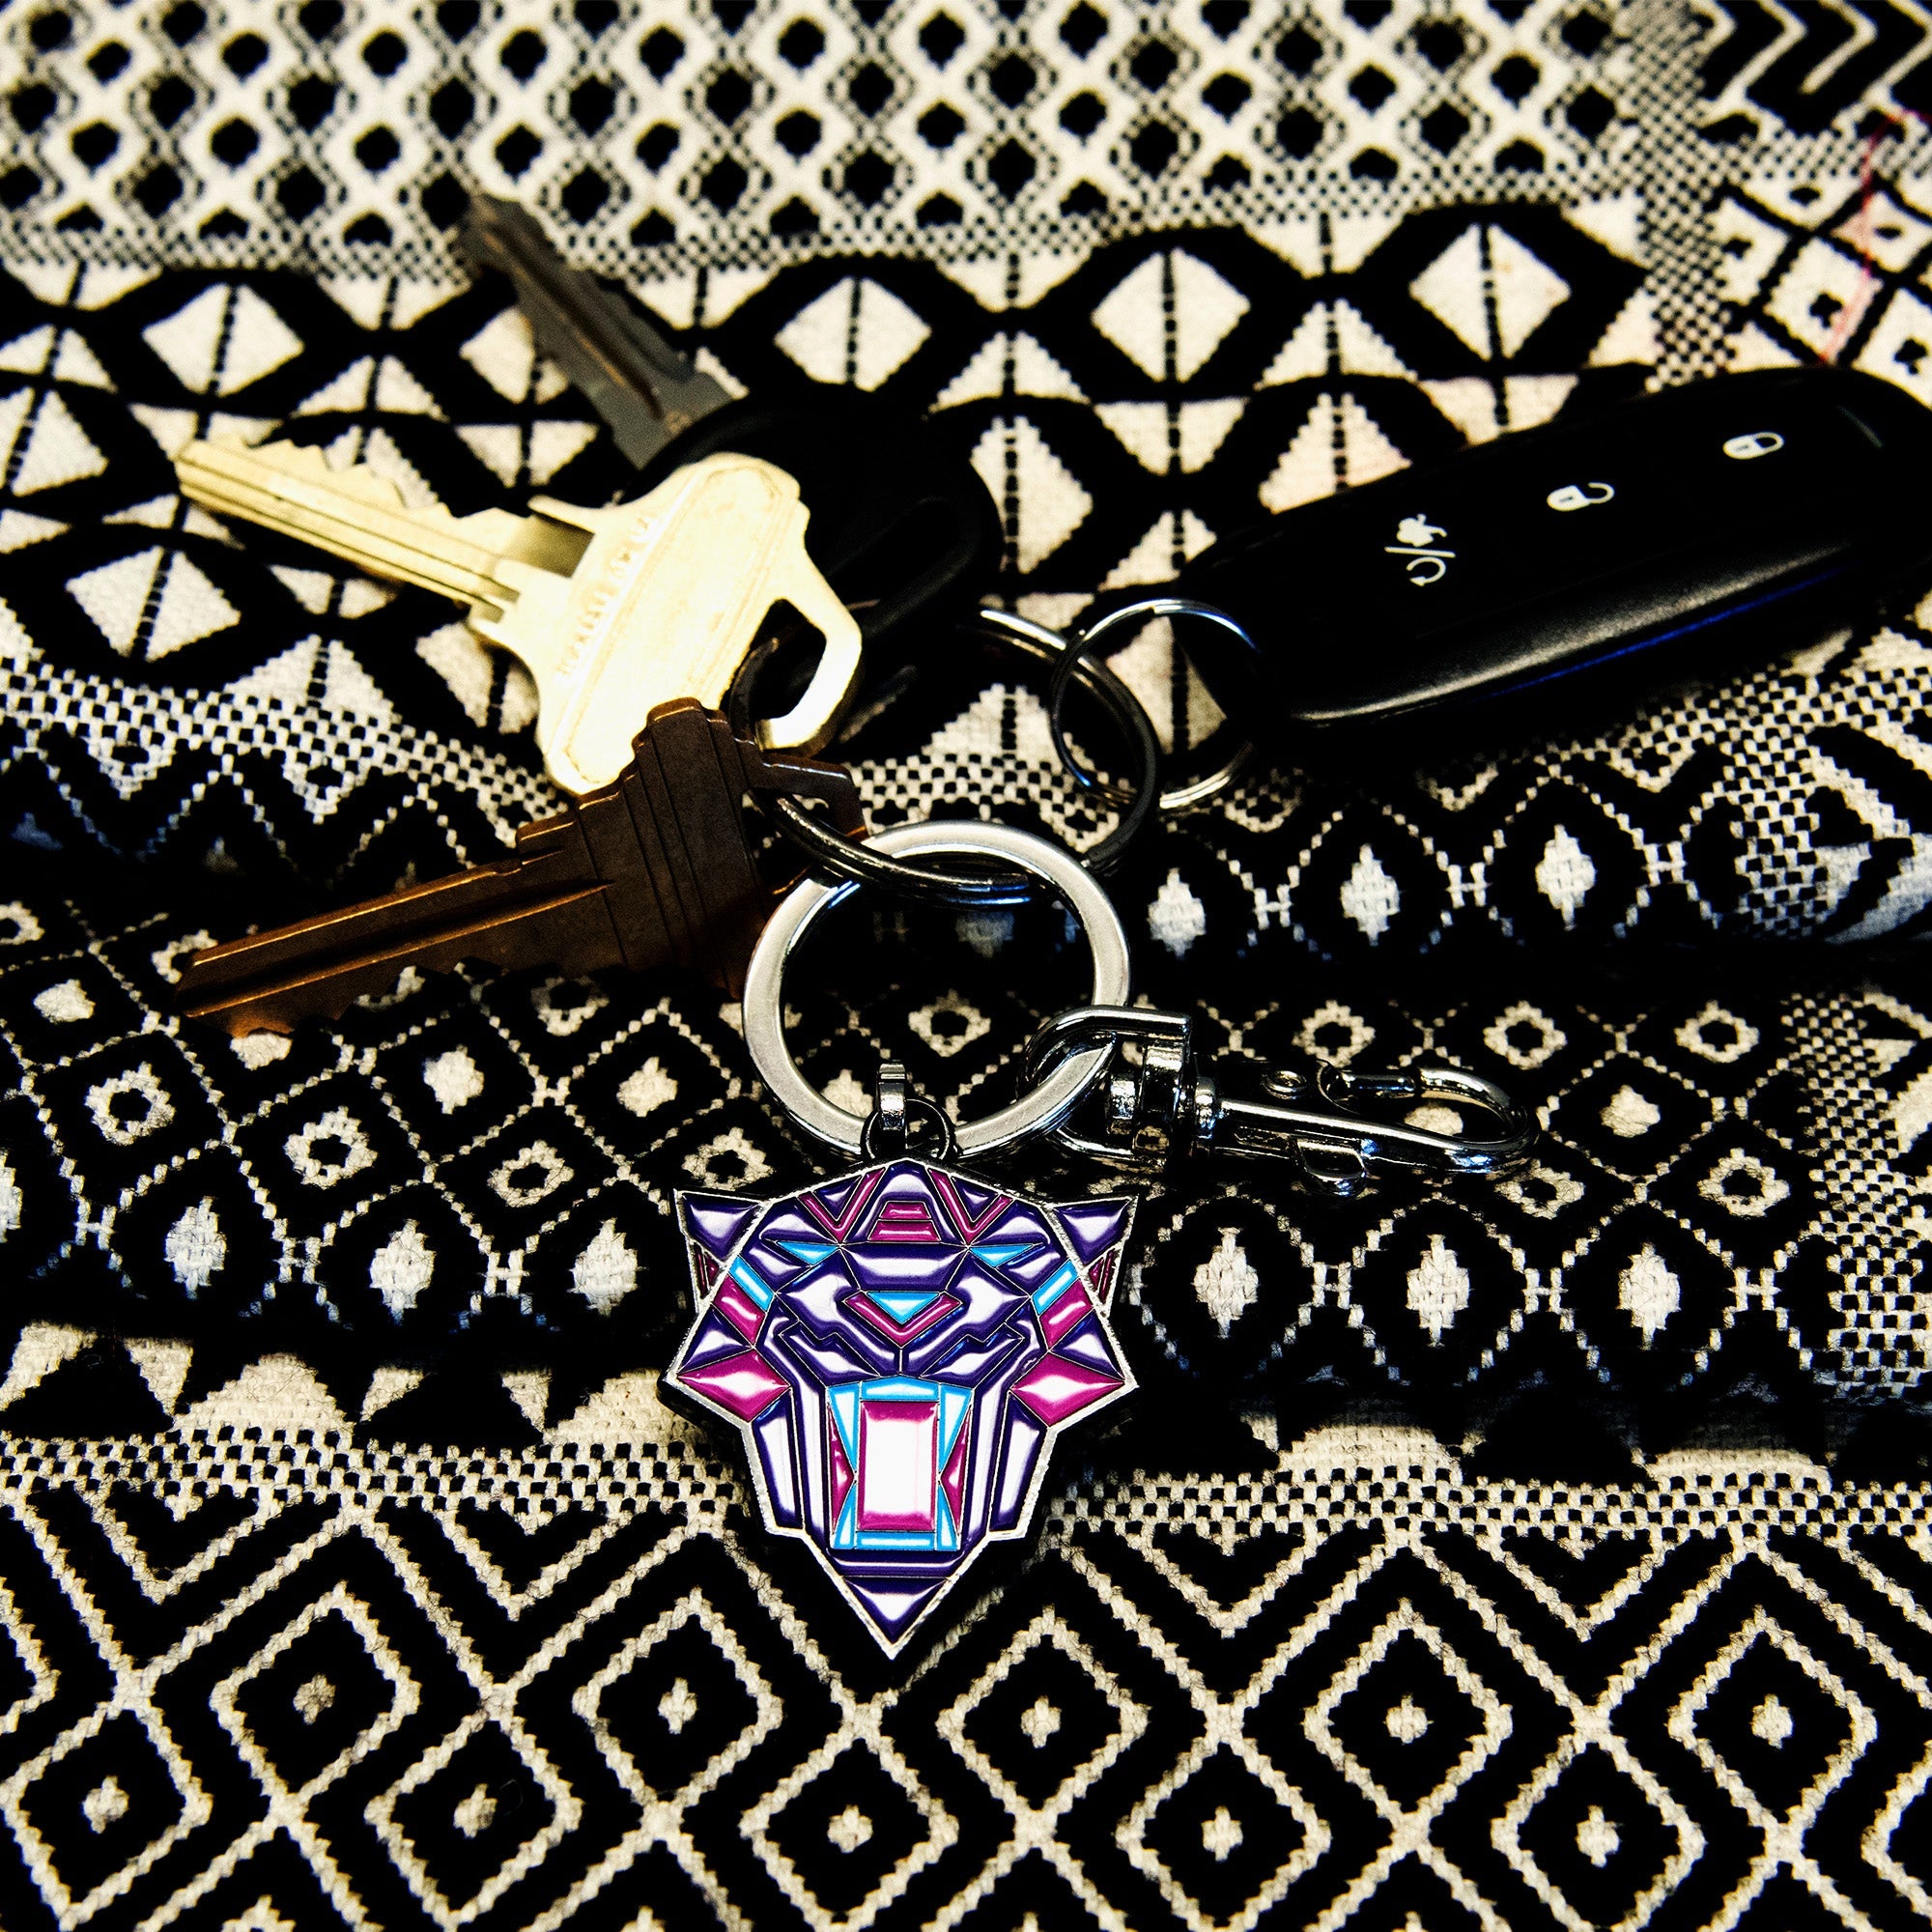 Black Panther: Wakanda Forever Purple Panther Keychain